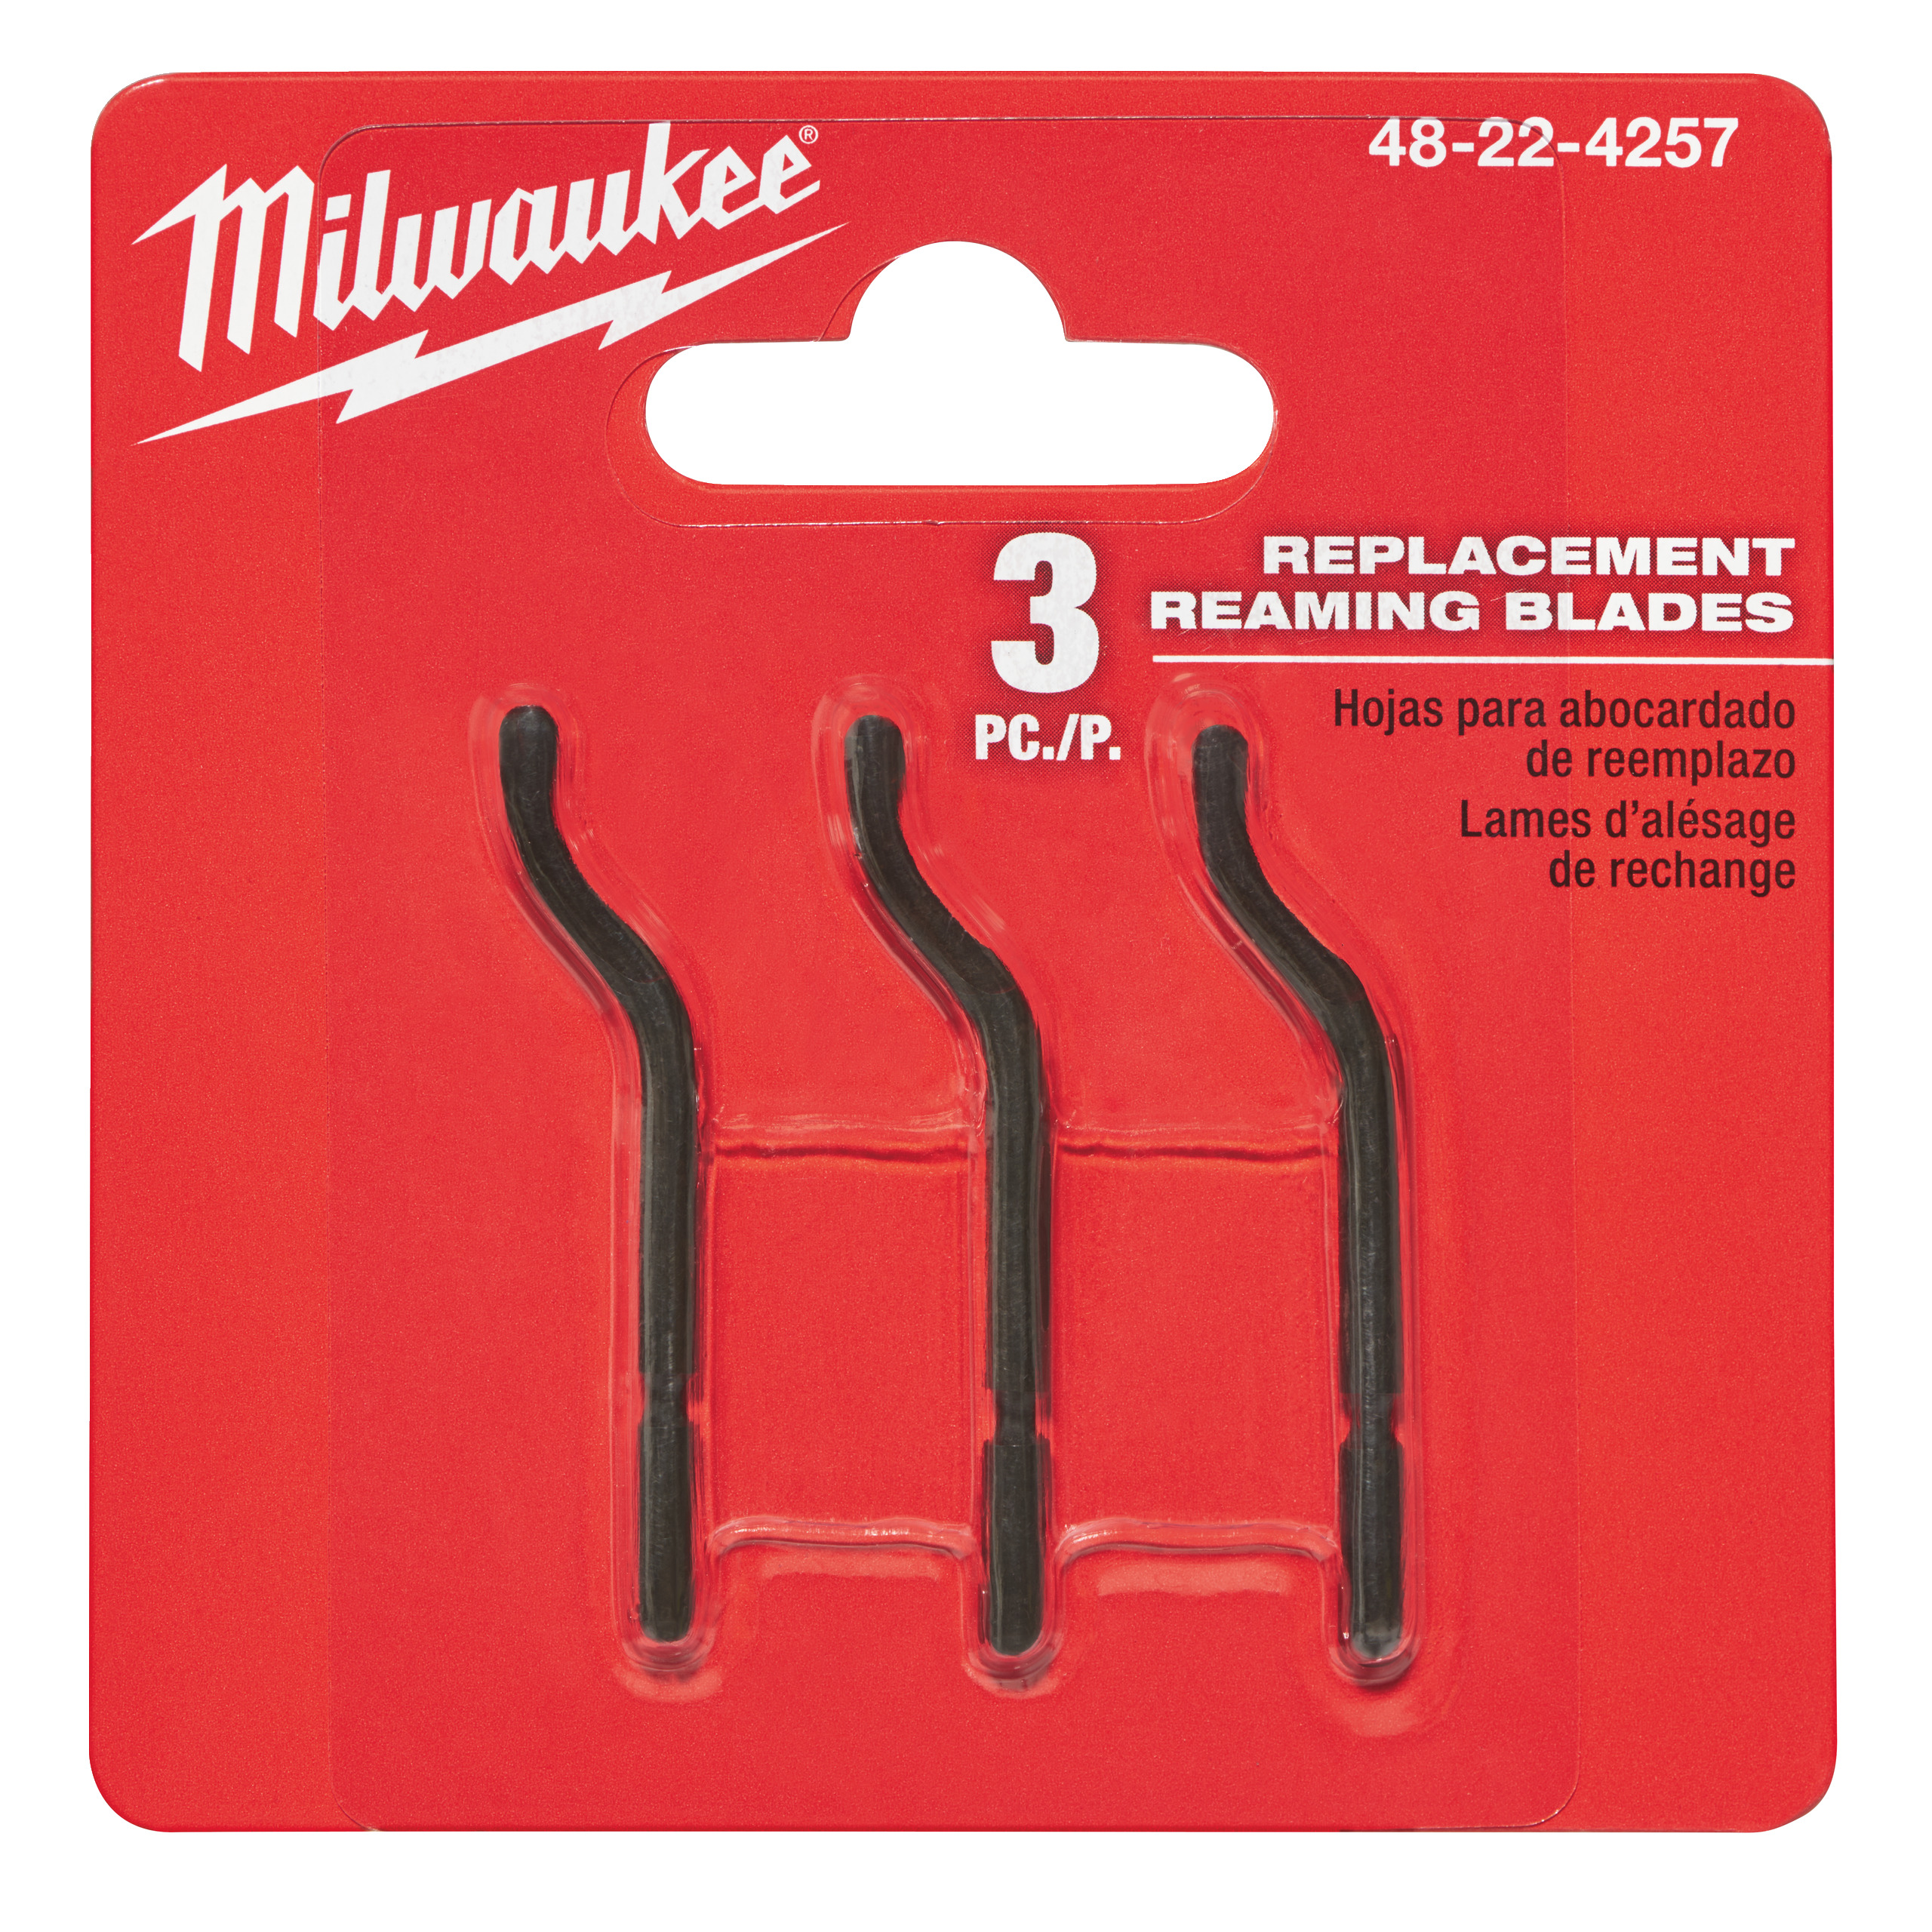 Milwaukee Reaming Blades - 3 pcs 48224257